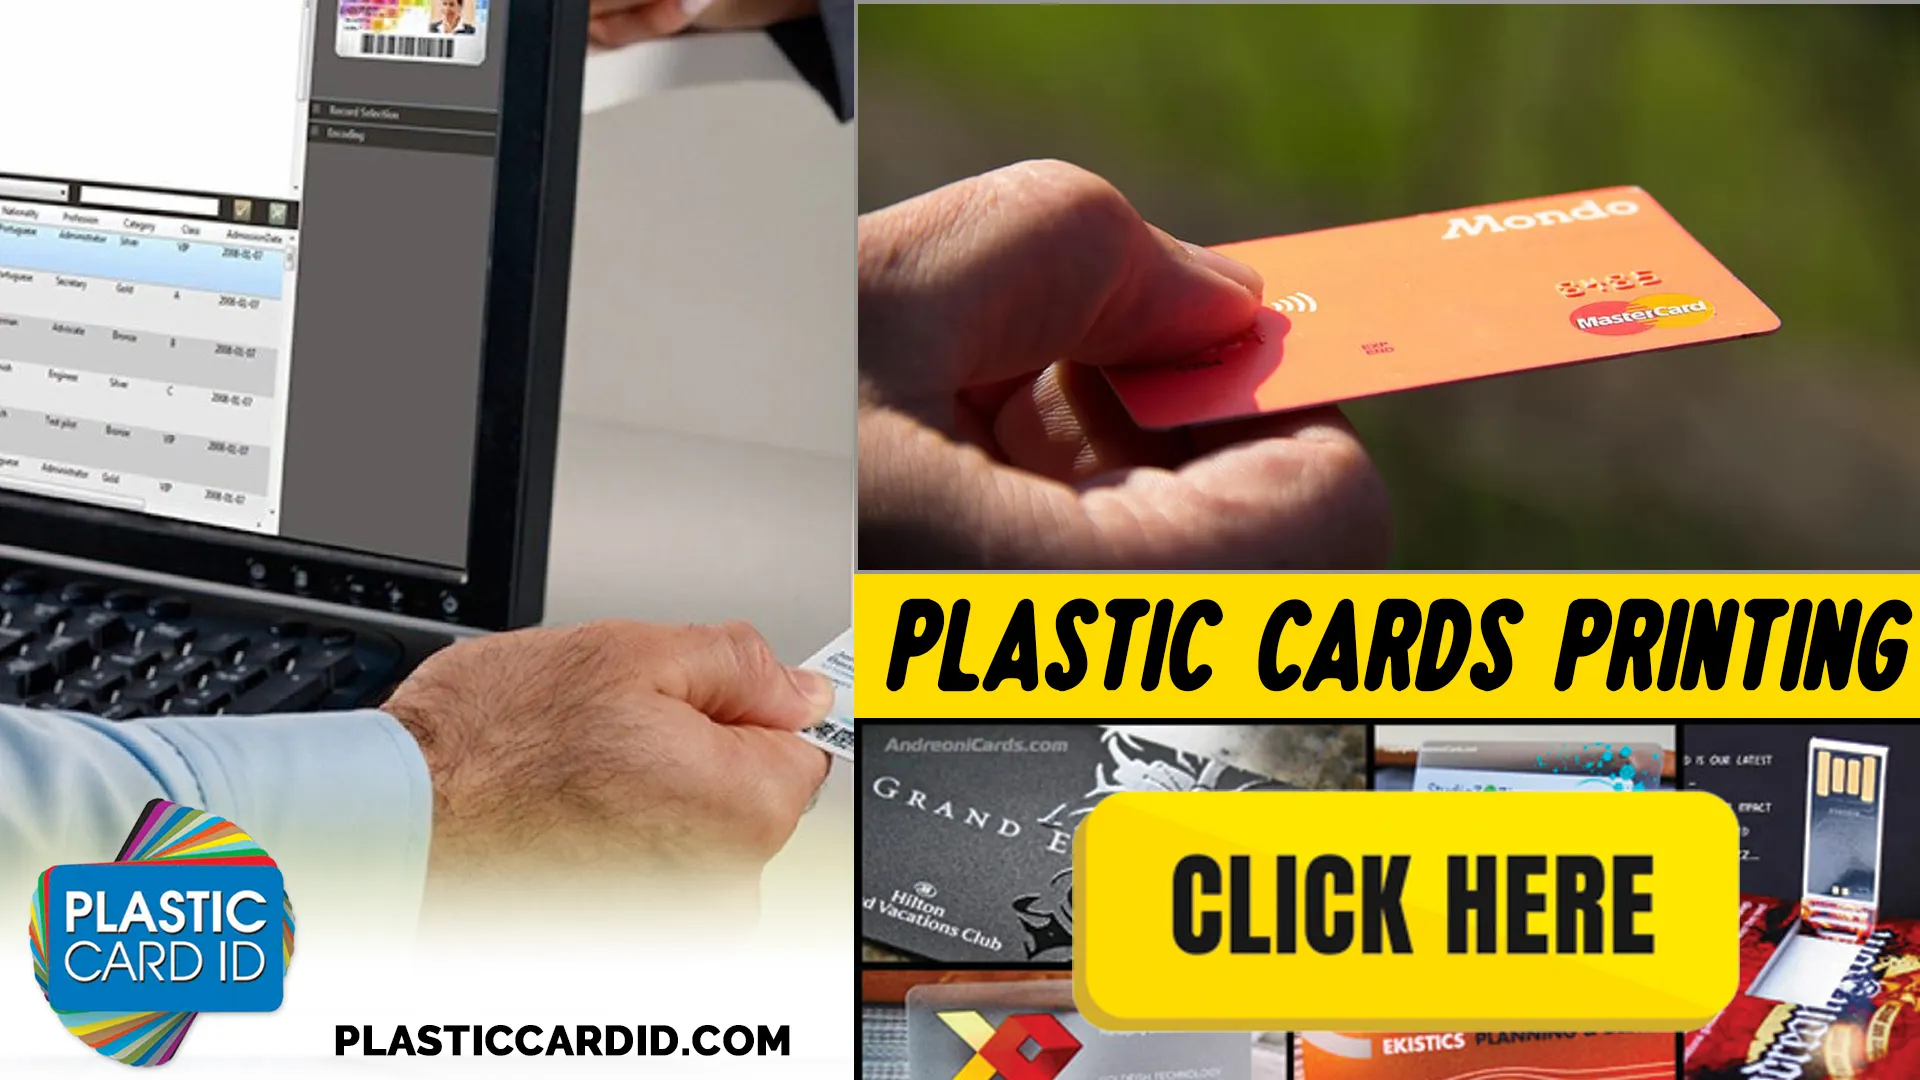 Why Custom Plastic Cards?